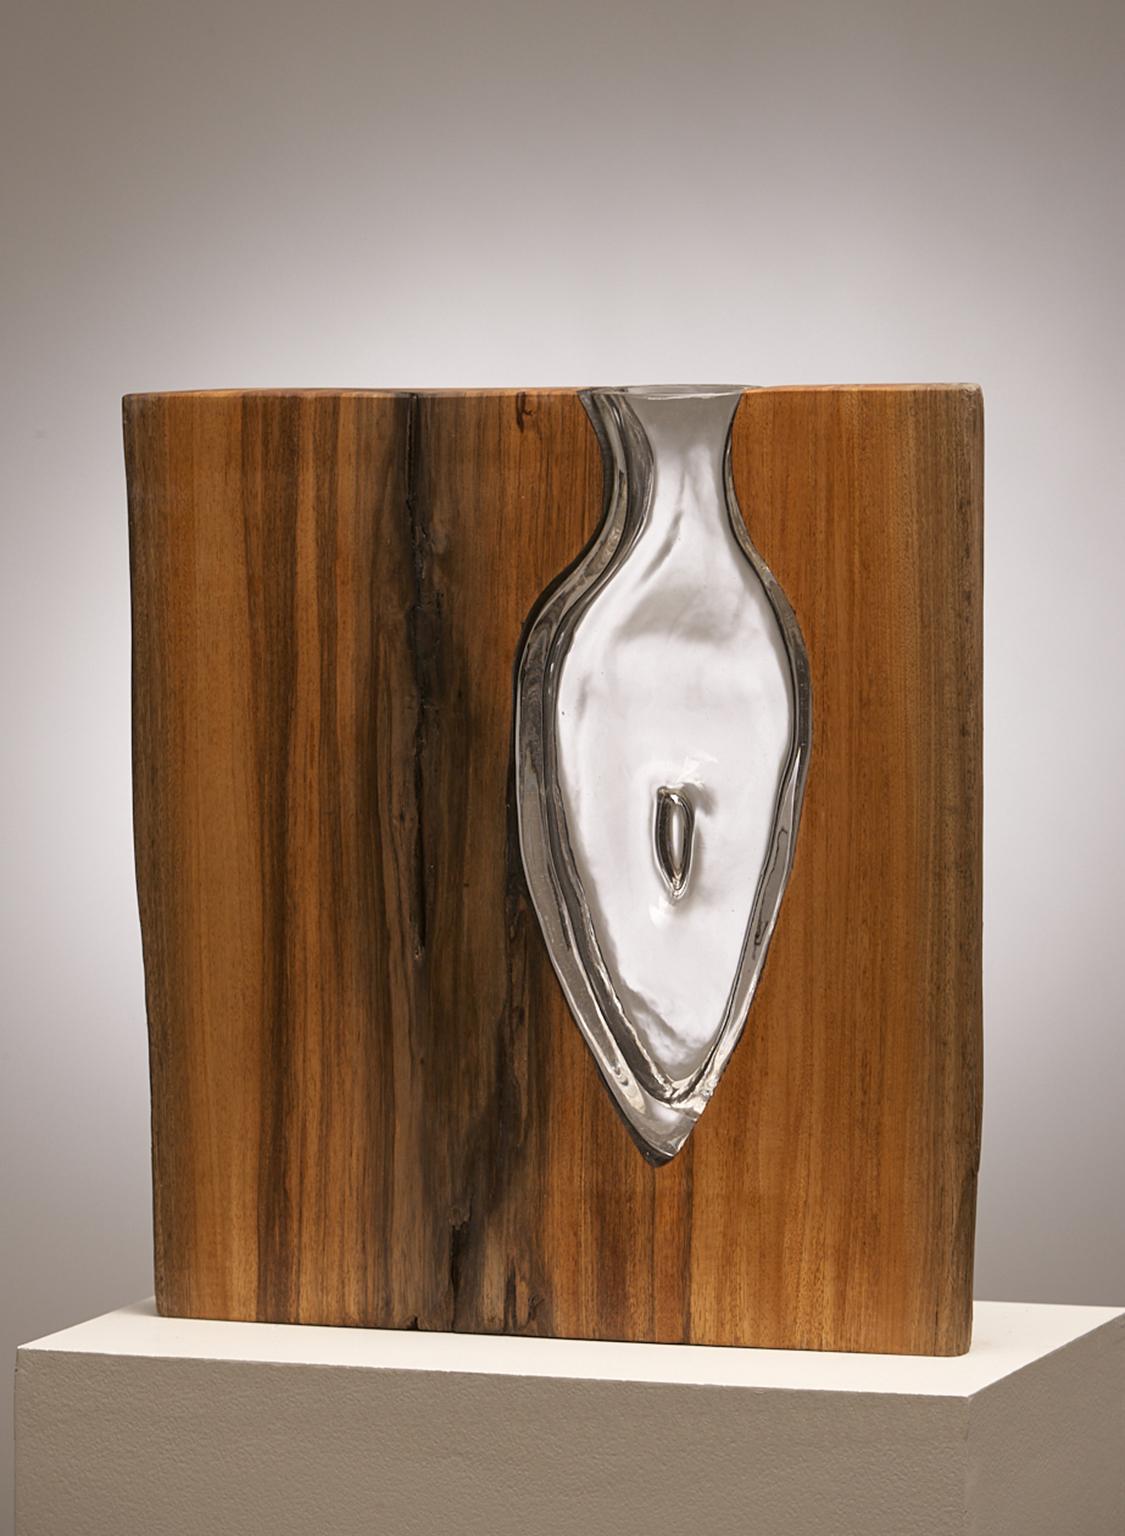 Hand Blown Clear Glass  with Live Edge Wood Vase Sculpture, Scott Slagerman - Mixed Media Art by Scott Slagerman / Jim Fishman